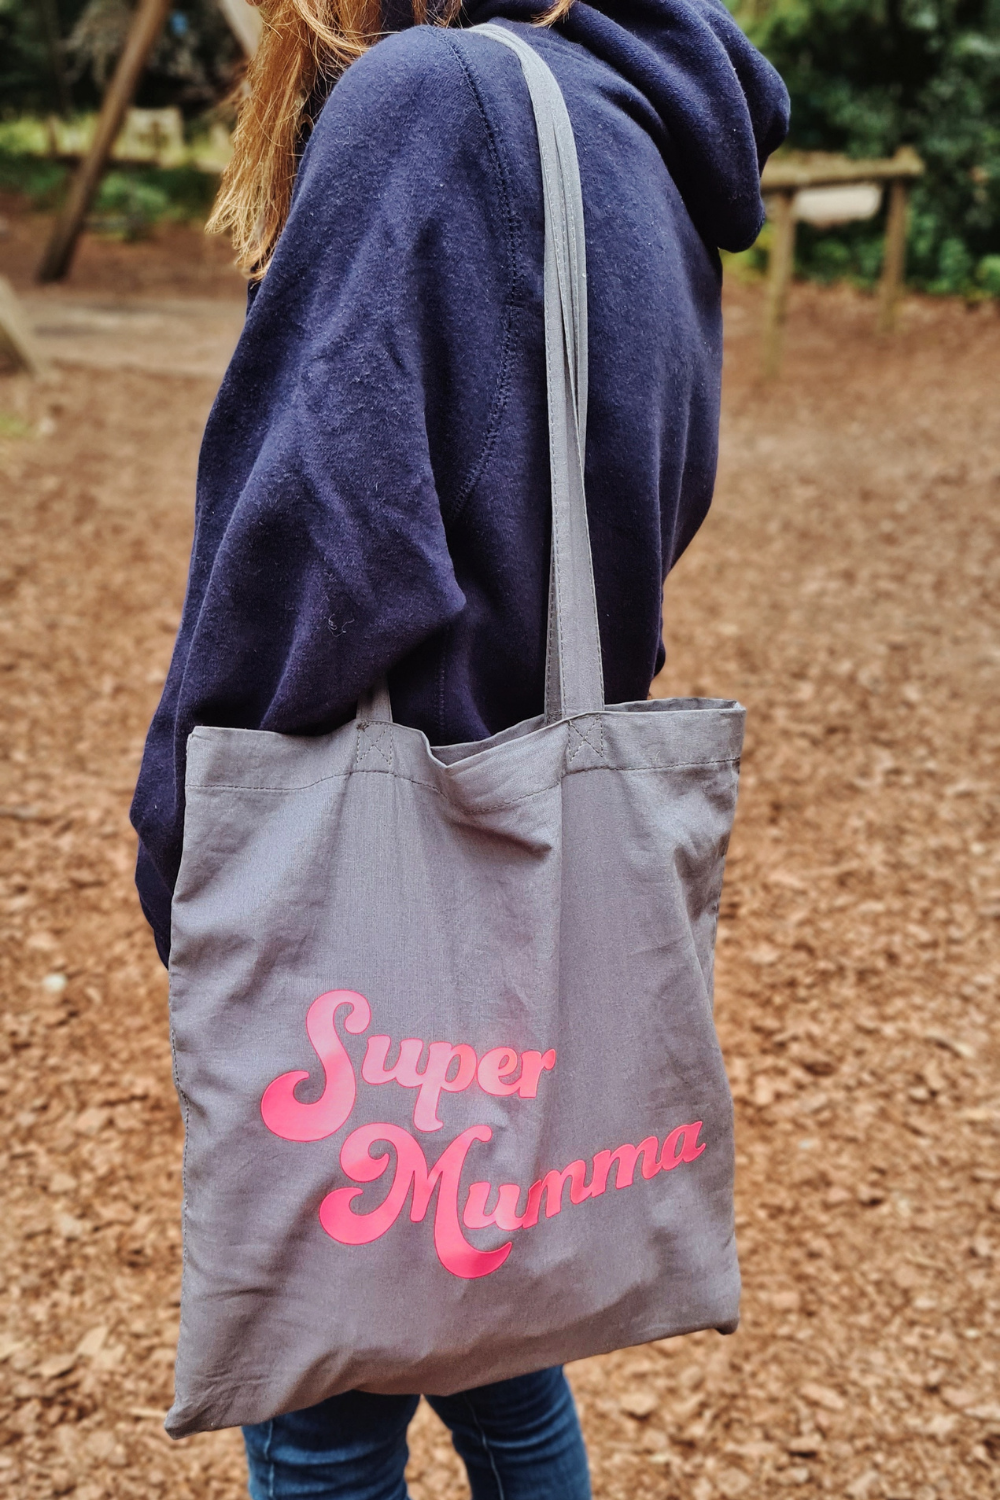 Super Mumma Shopper Neon Pink